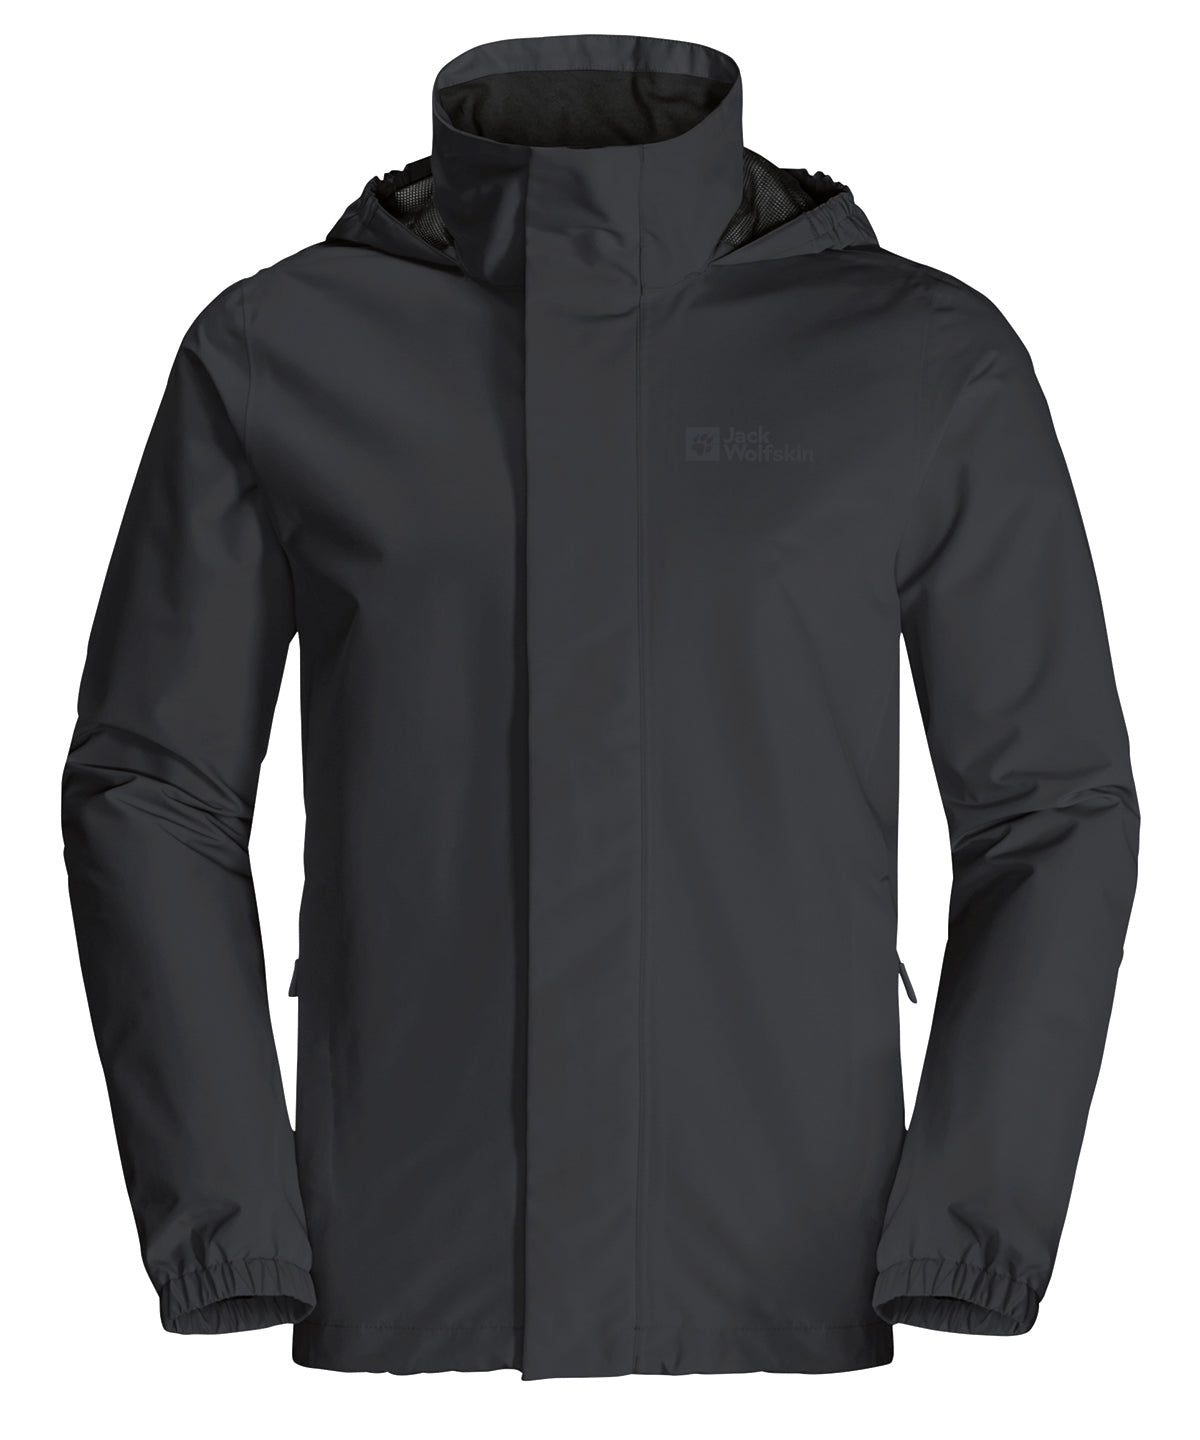 Personalised Jackets - Black Jack Wolfskin Waterproof jacket  (NL)